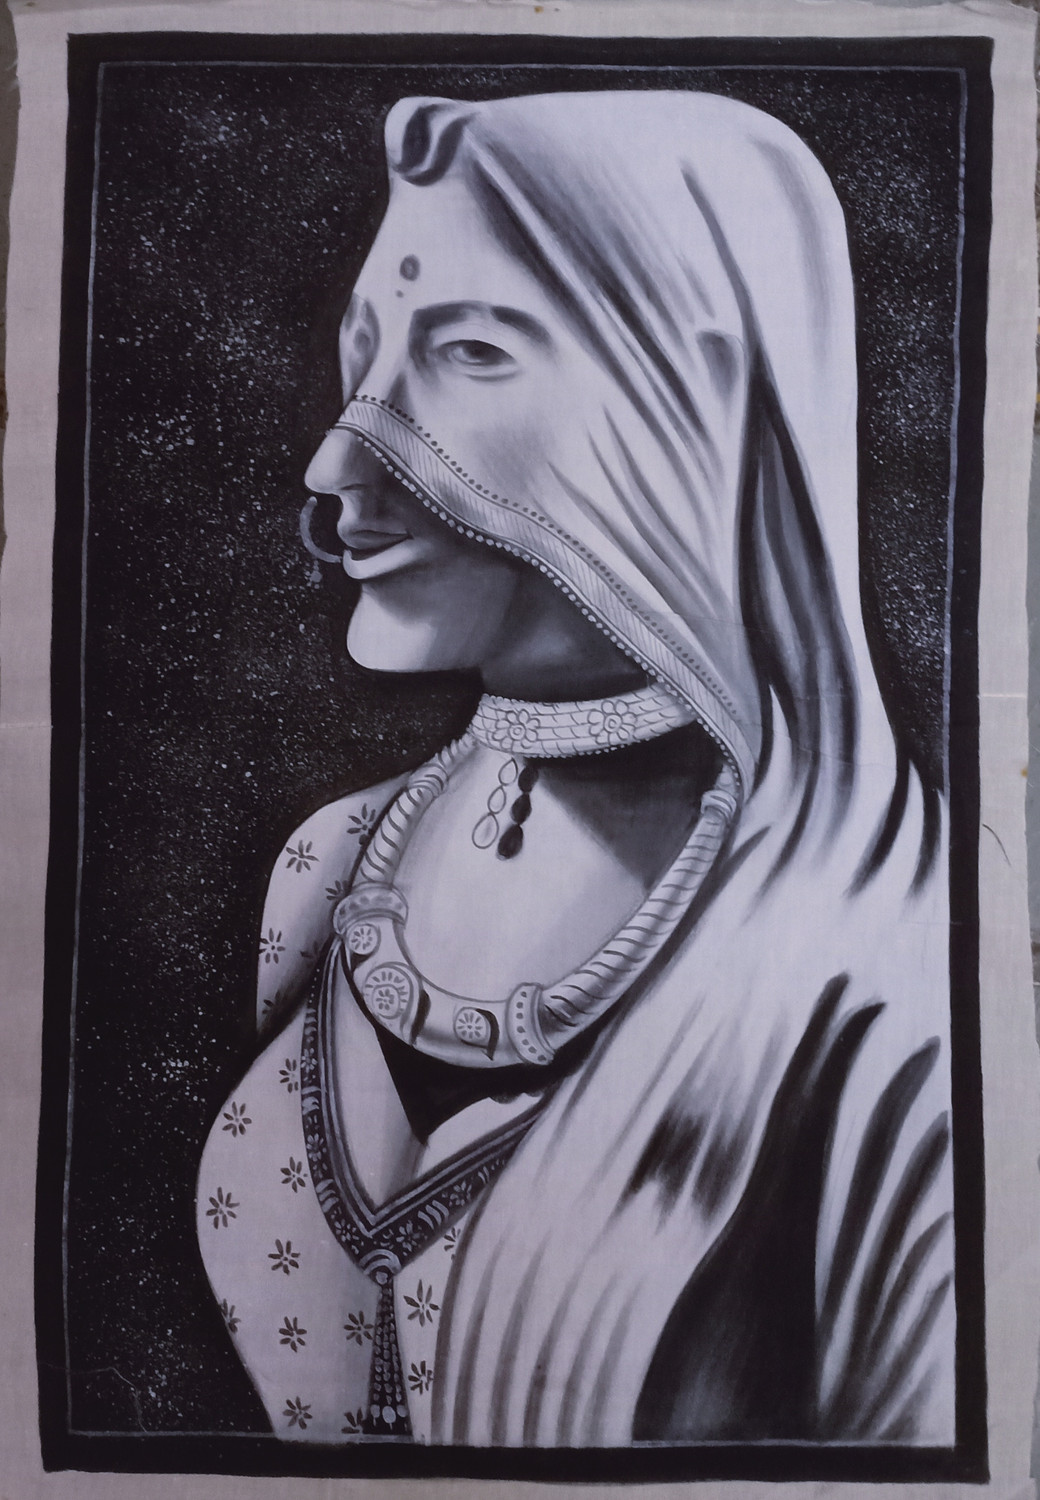 Rajasthani woman by rkssks on DeviantArt